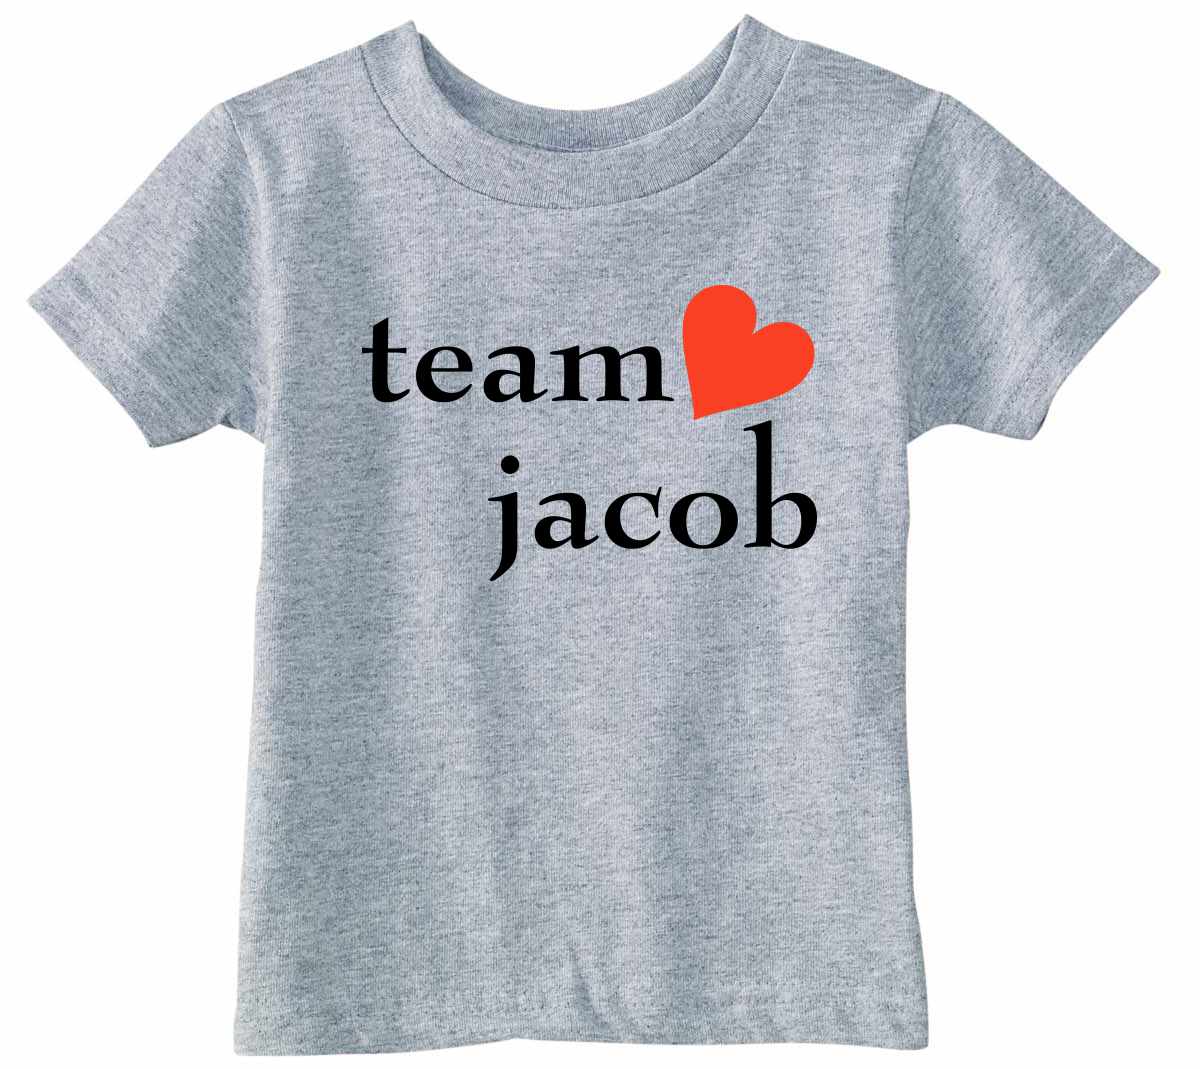 TEAM JACOB Infant/Toddler T-Shirt (#275-7)